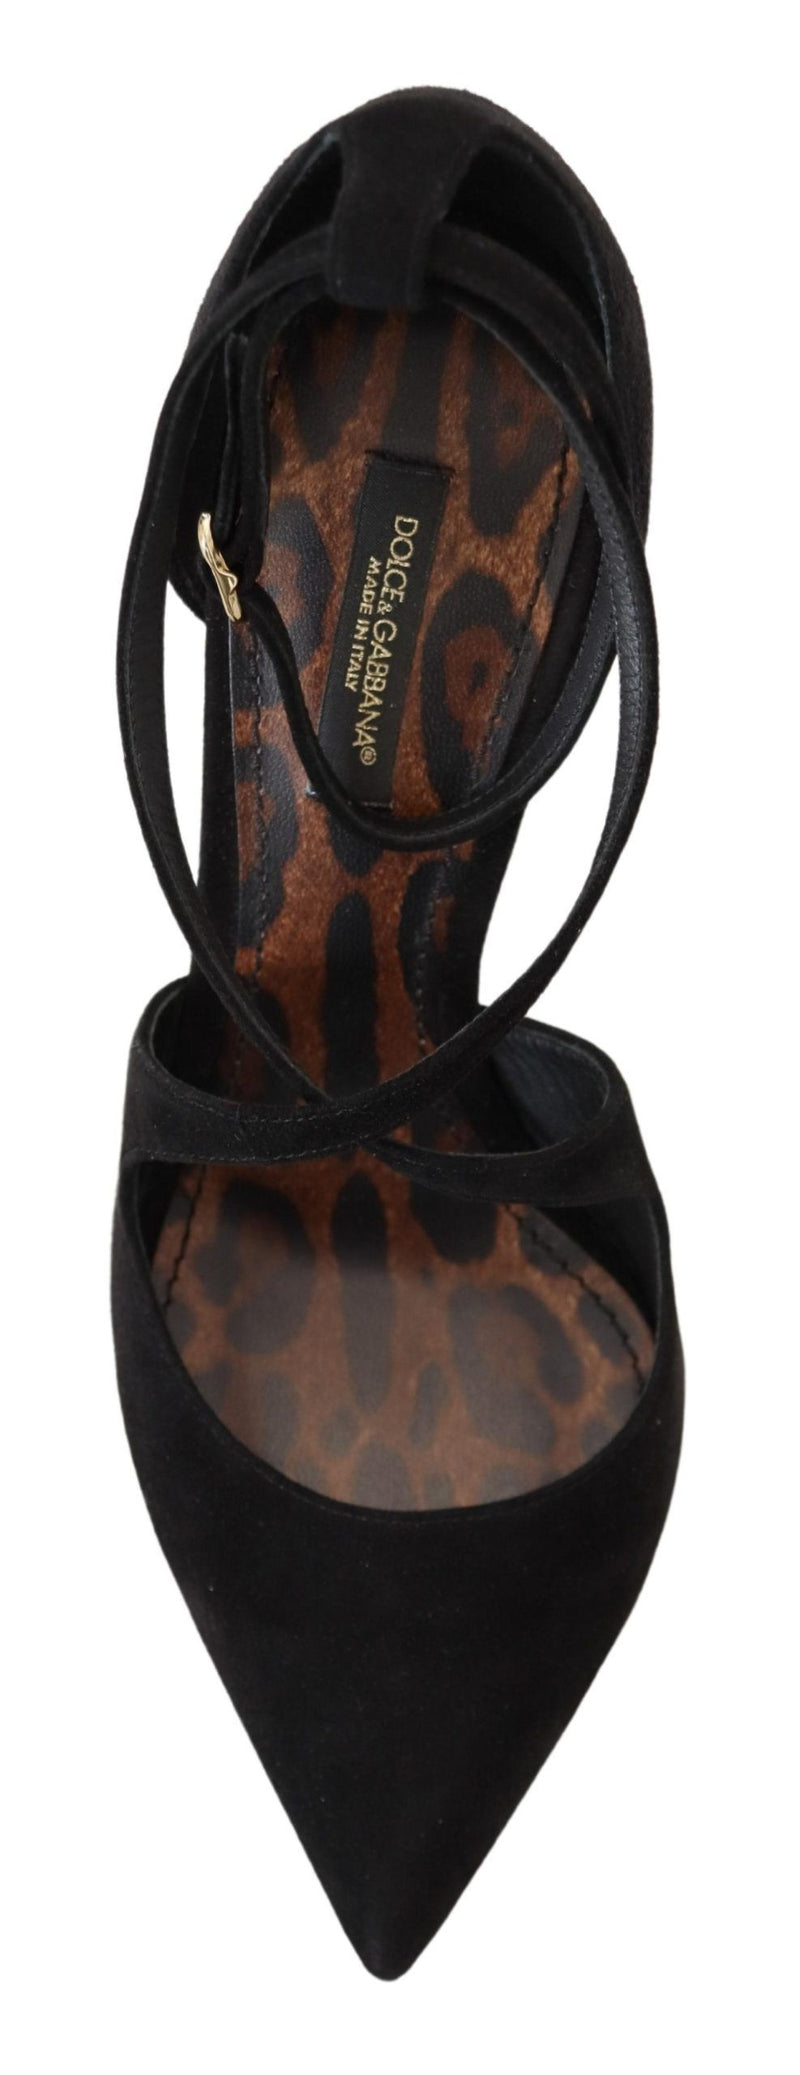 Dolce & Gabbana Elegant Ankle Strap Suede Women's Heels